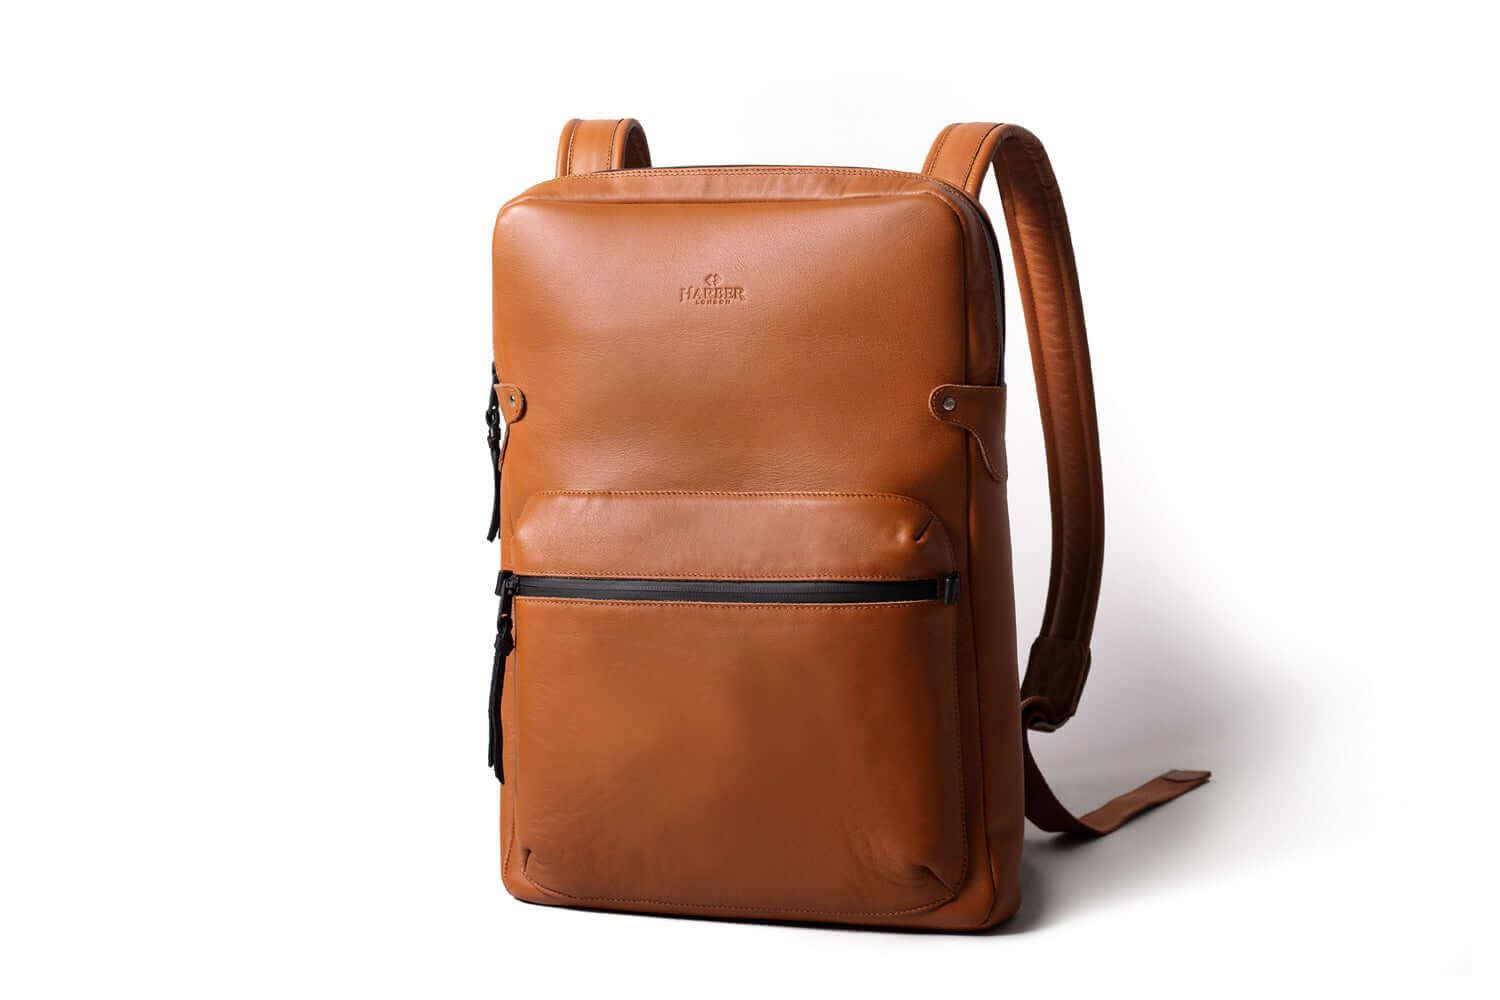 Buy Topper Bags Stylish Ladies Sleek & Slim Leather Backpack School Bag  Casual bagpack for Girls (Beige) at Amazon.in